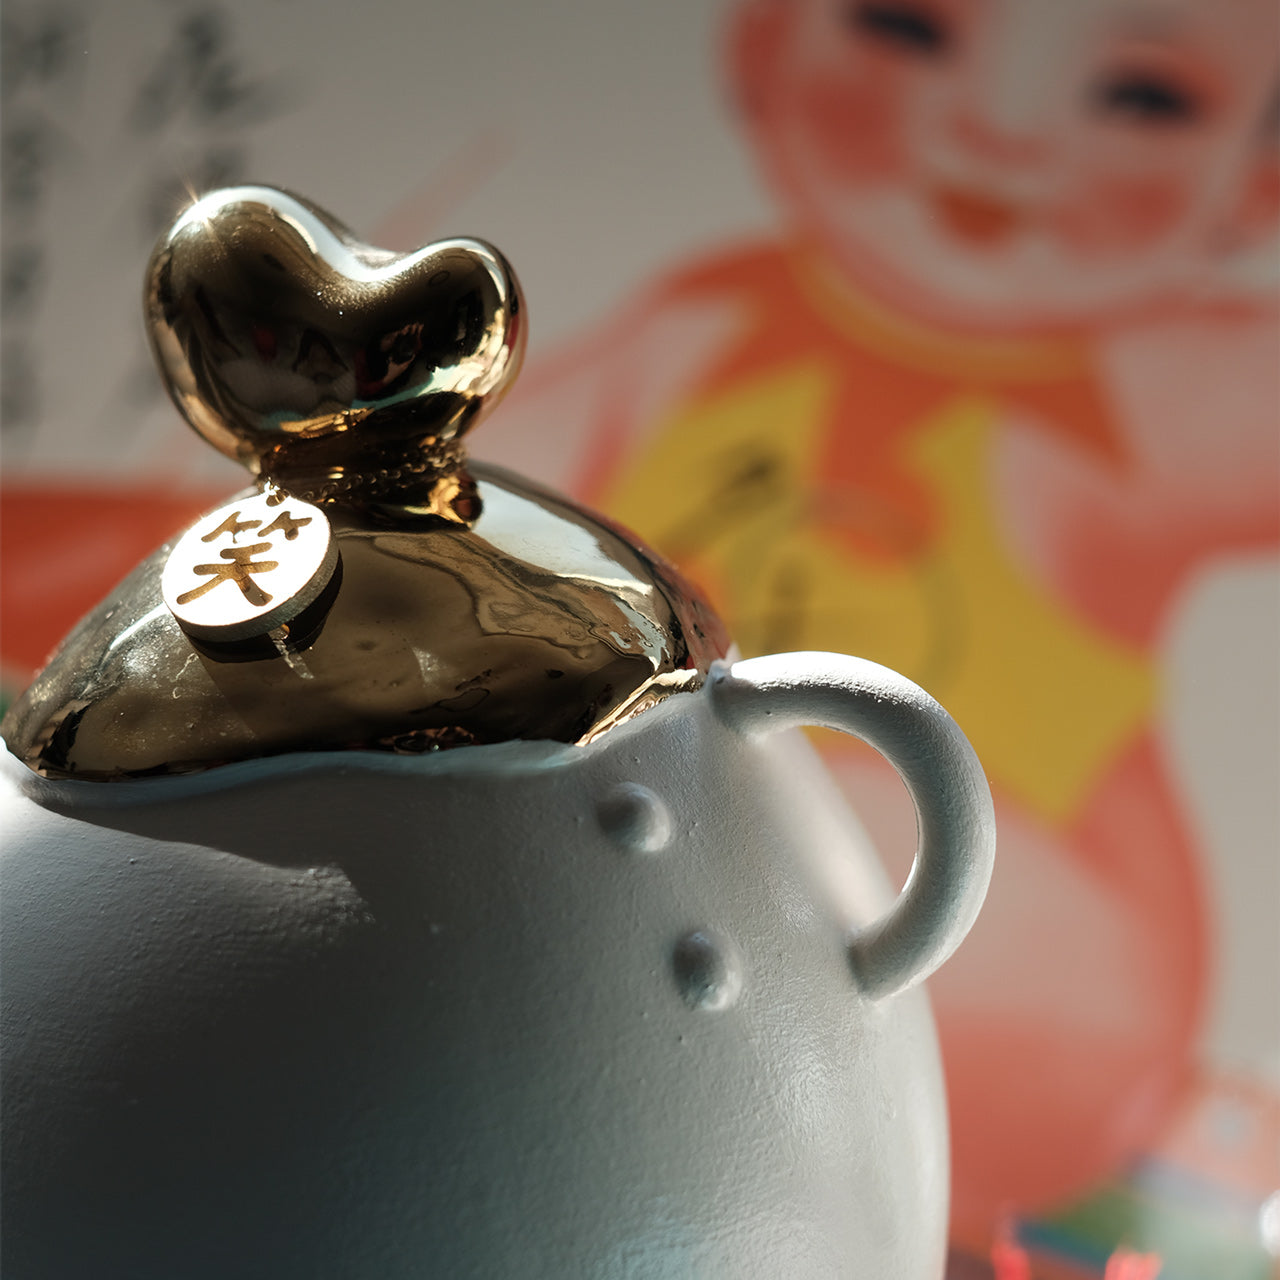 minimal happy bean 招笑豆 artist tts the tiny smile art Gift Shop Hong Kong Souvenirs lucky cat ceramic home decor 香港藝術禮品店 創意禮物 陶瓷擺設 招財 快樂 笑臉 搬家 生日送禮